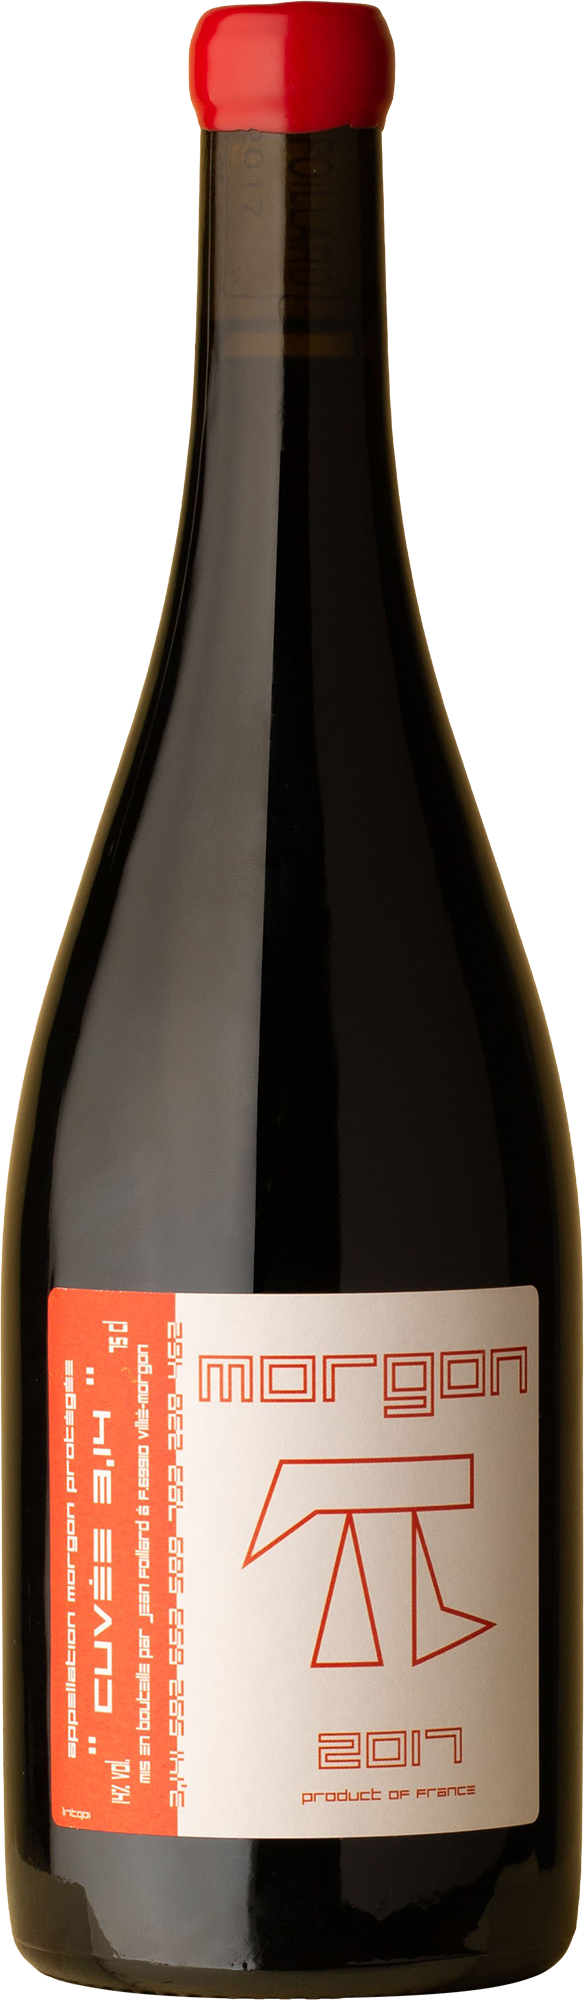 Jean Foillard - Morgon Cuvée 3.14 Gamay 2017 Red Wine